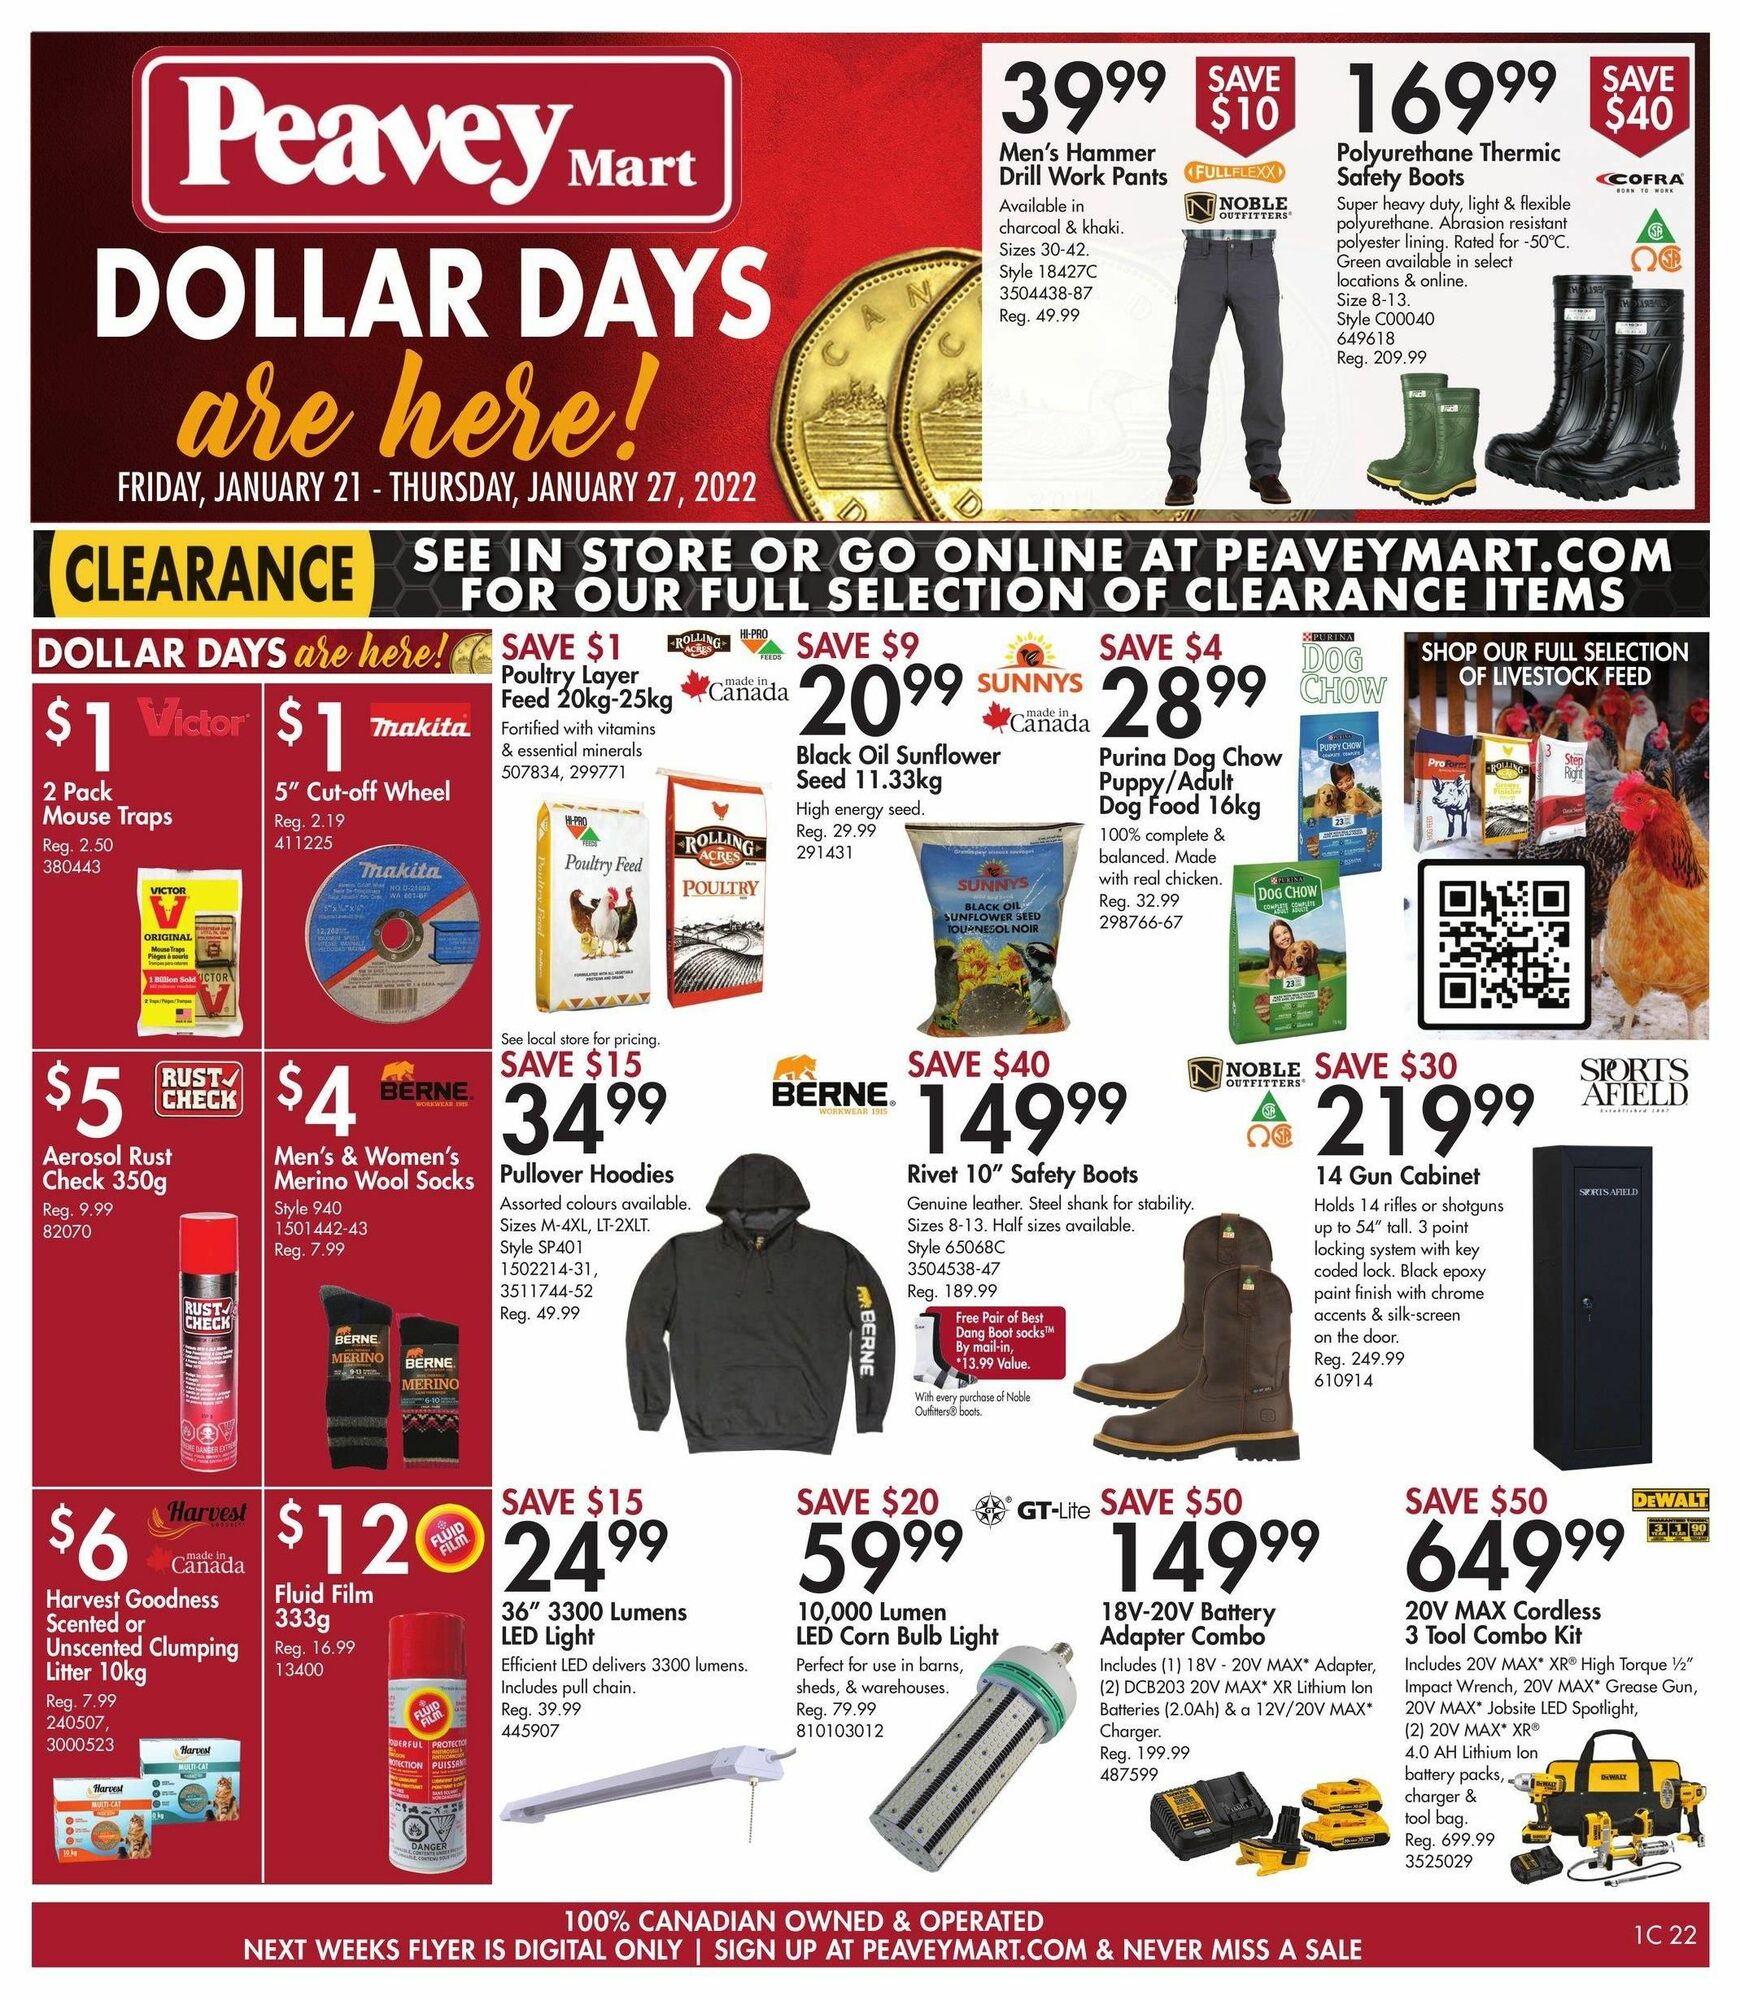 Peavey Mart - Weekly Flyer Specials - Dollar Days